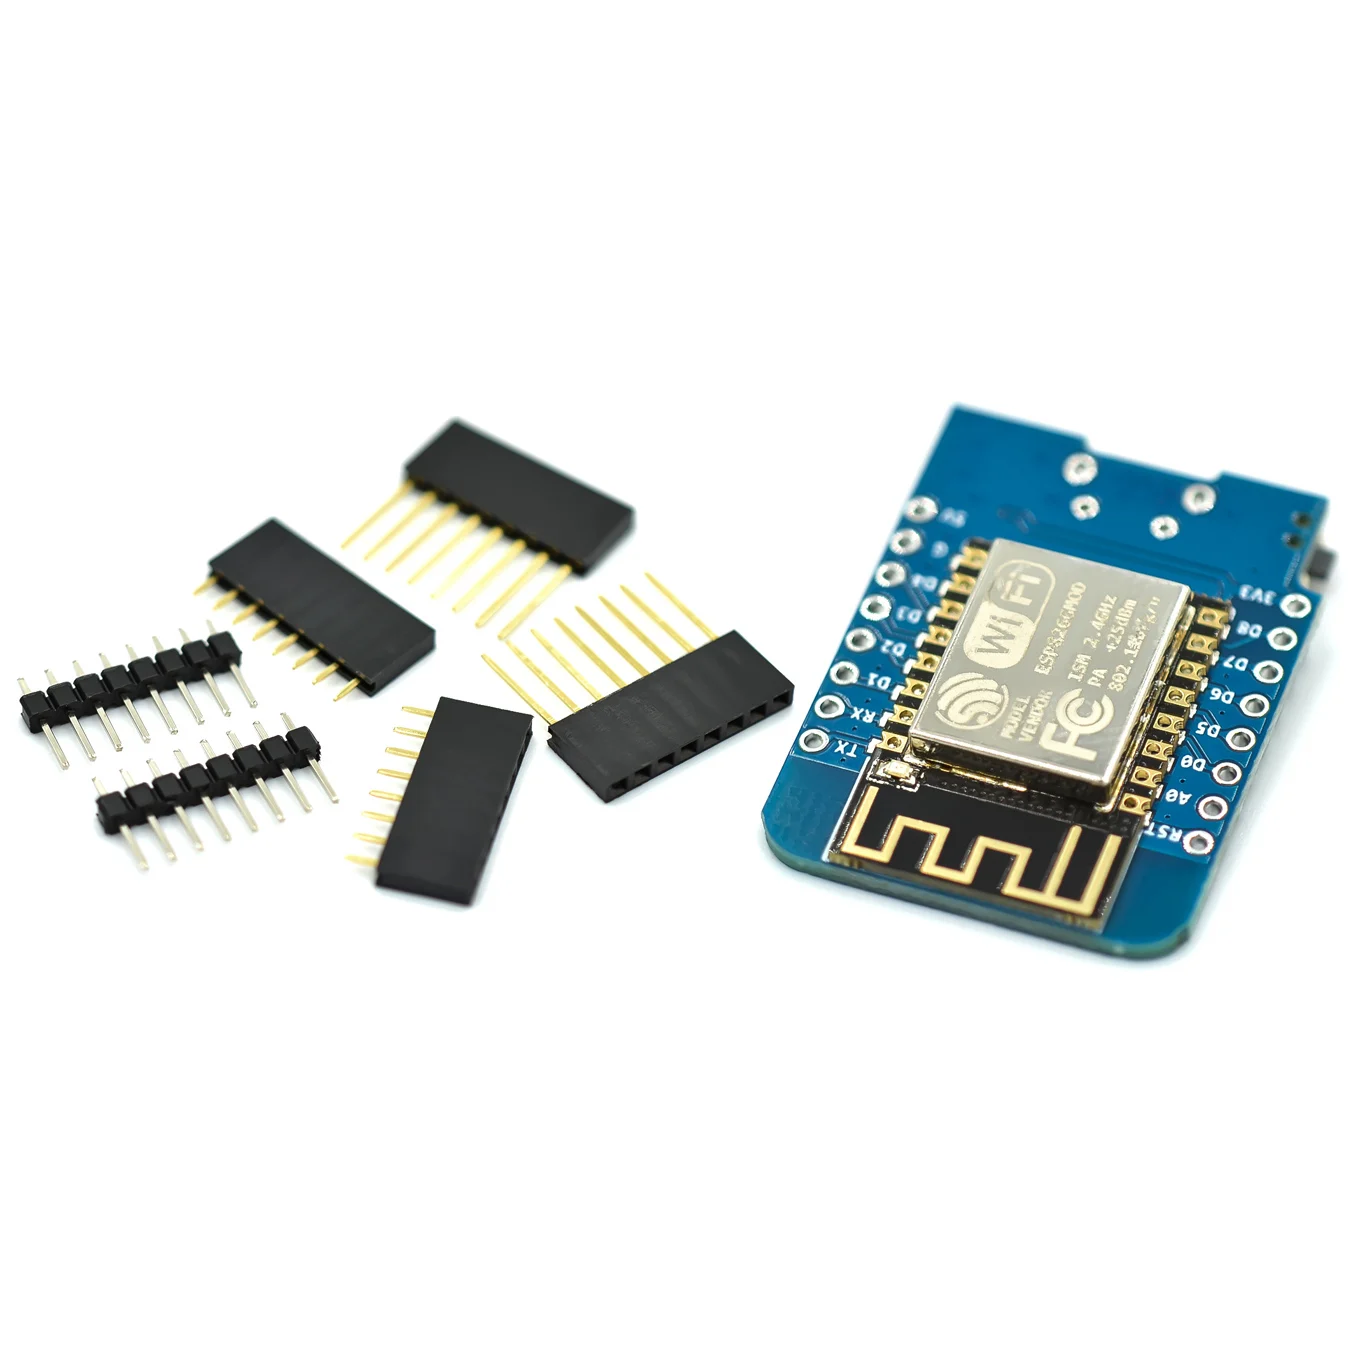 10PCS D1 mini - Mini NodeMcu 4M bytes Lua WIFI Internet of Things development board based ESP8266 by WeMos Module | Электронные